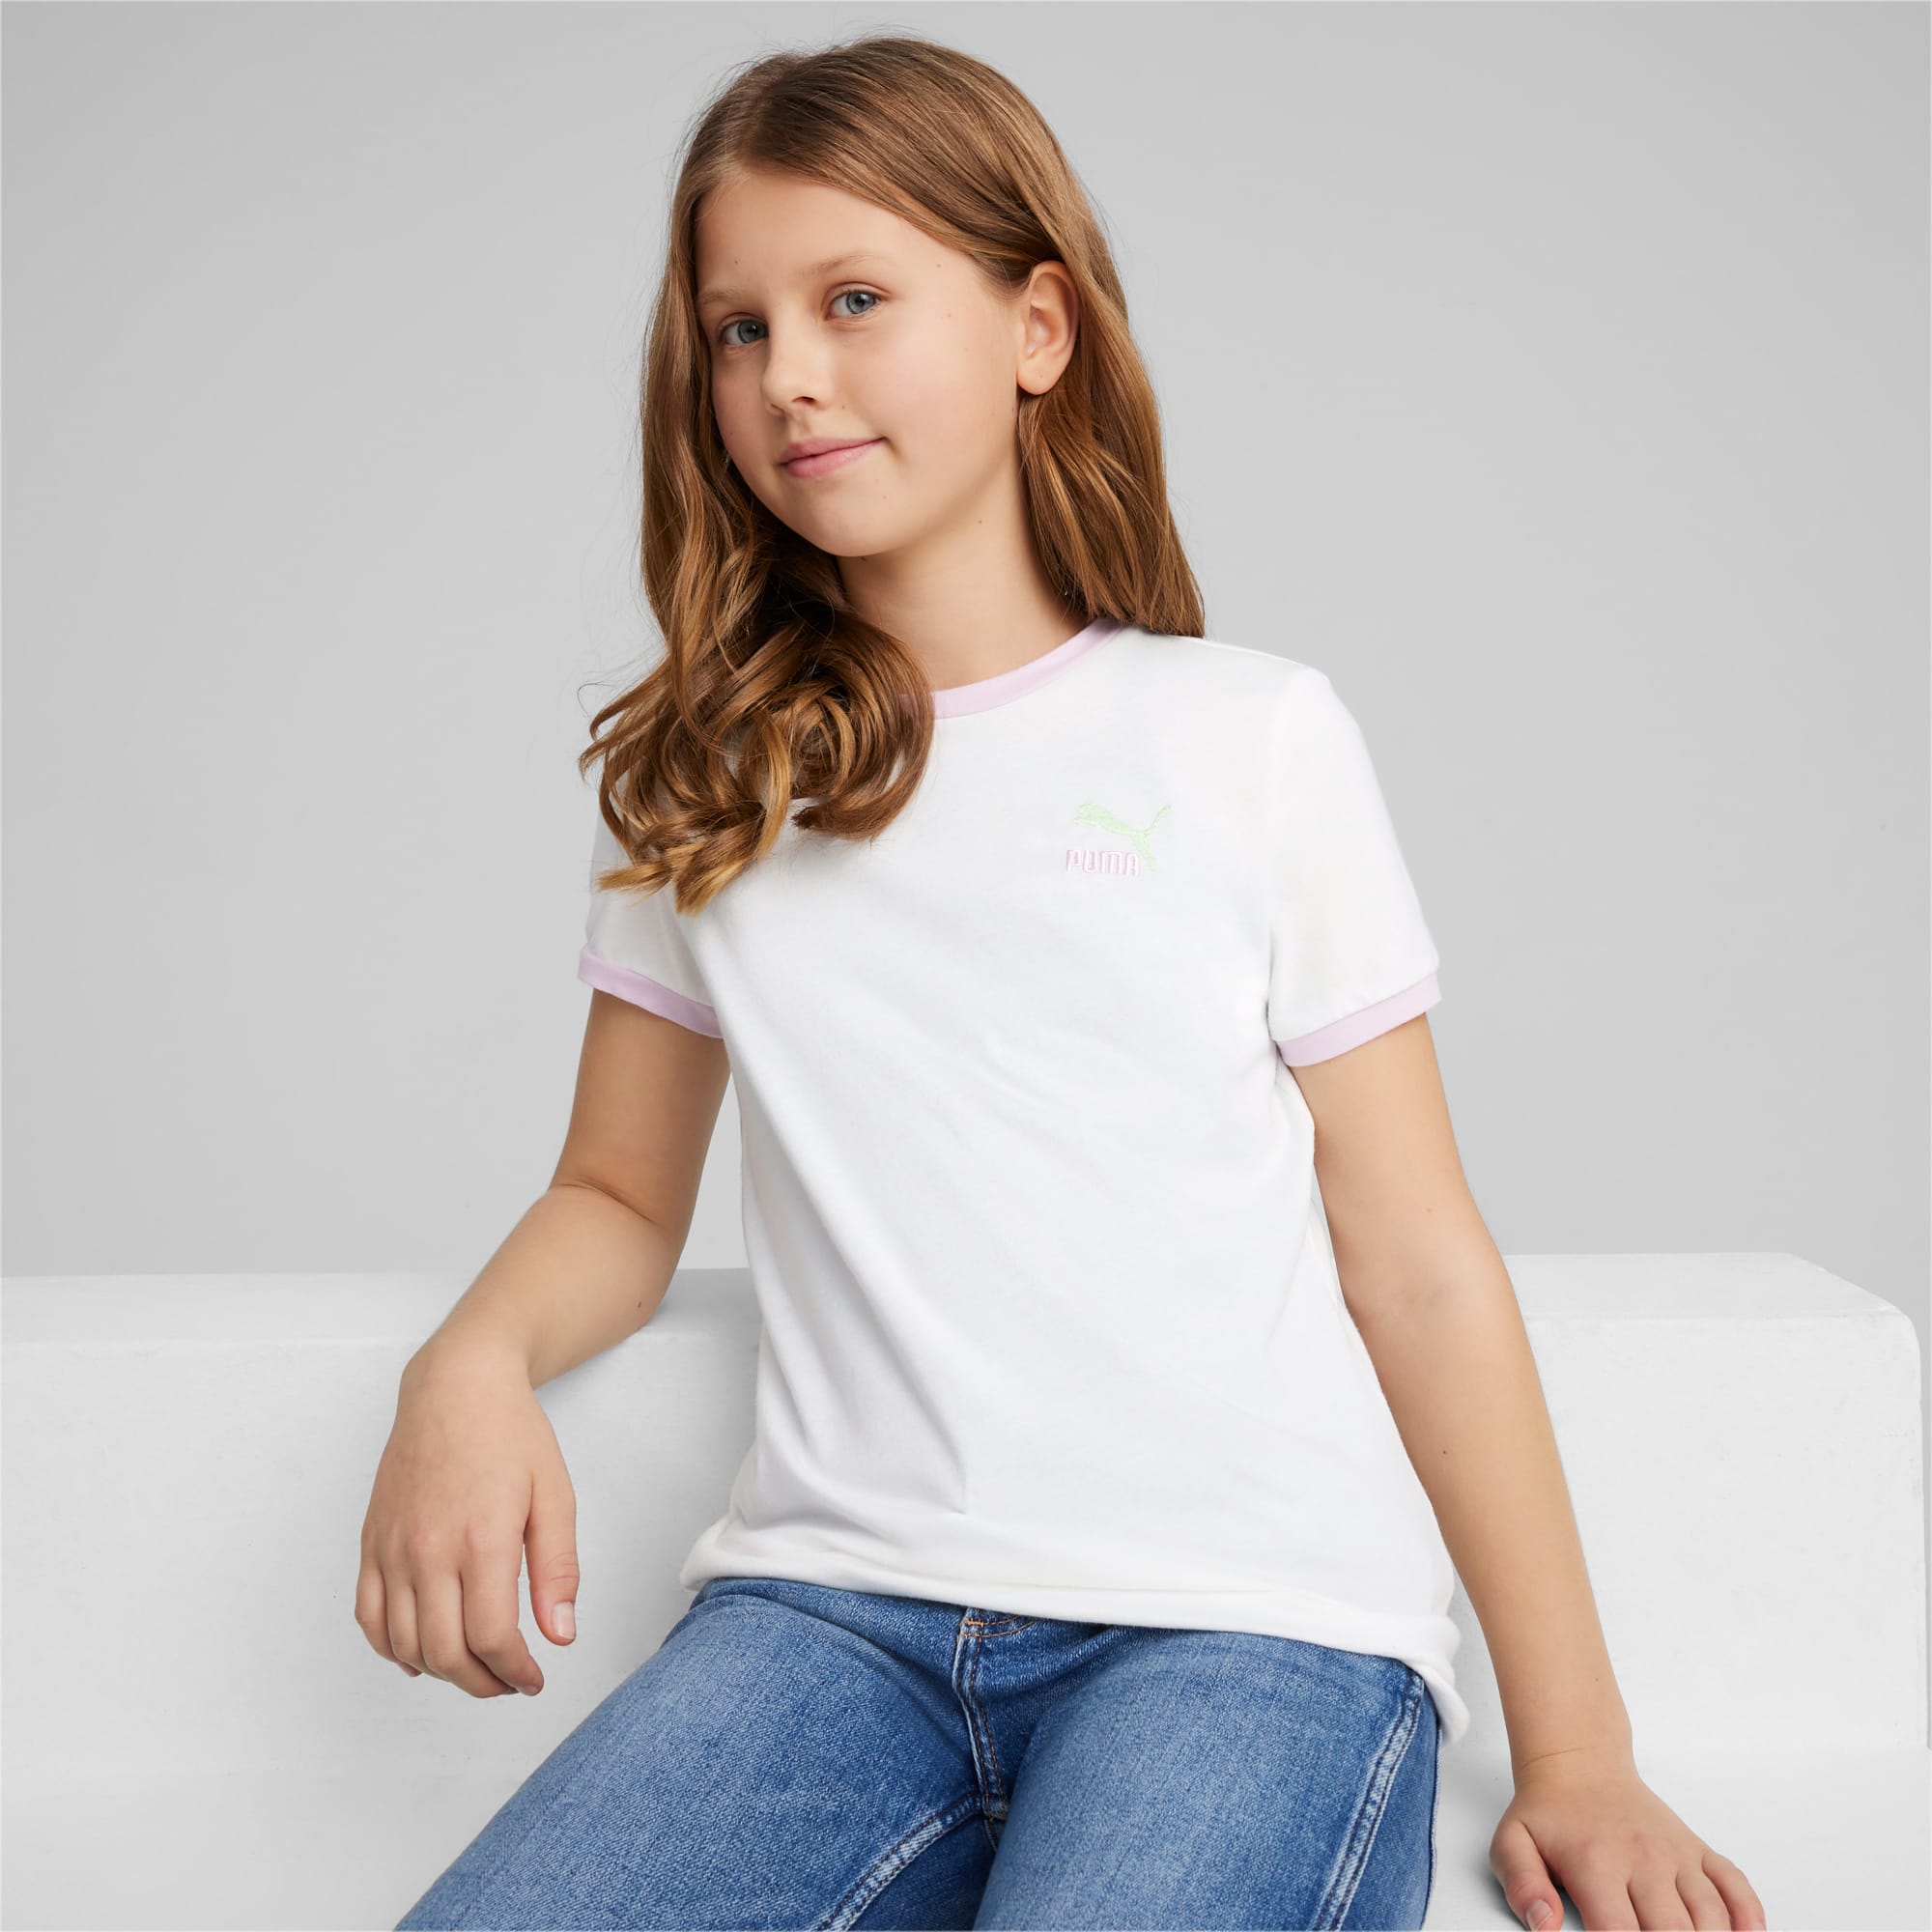 PUMA Classics Match Point Youth T-Shirt, White, Size 128, Clothing